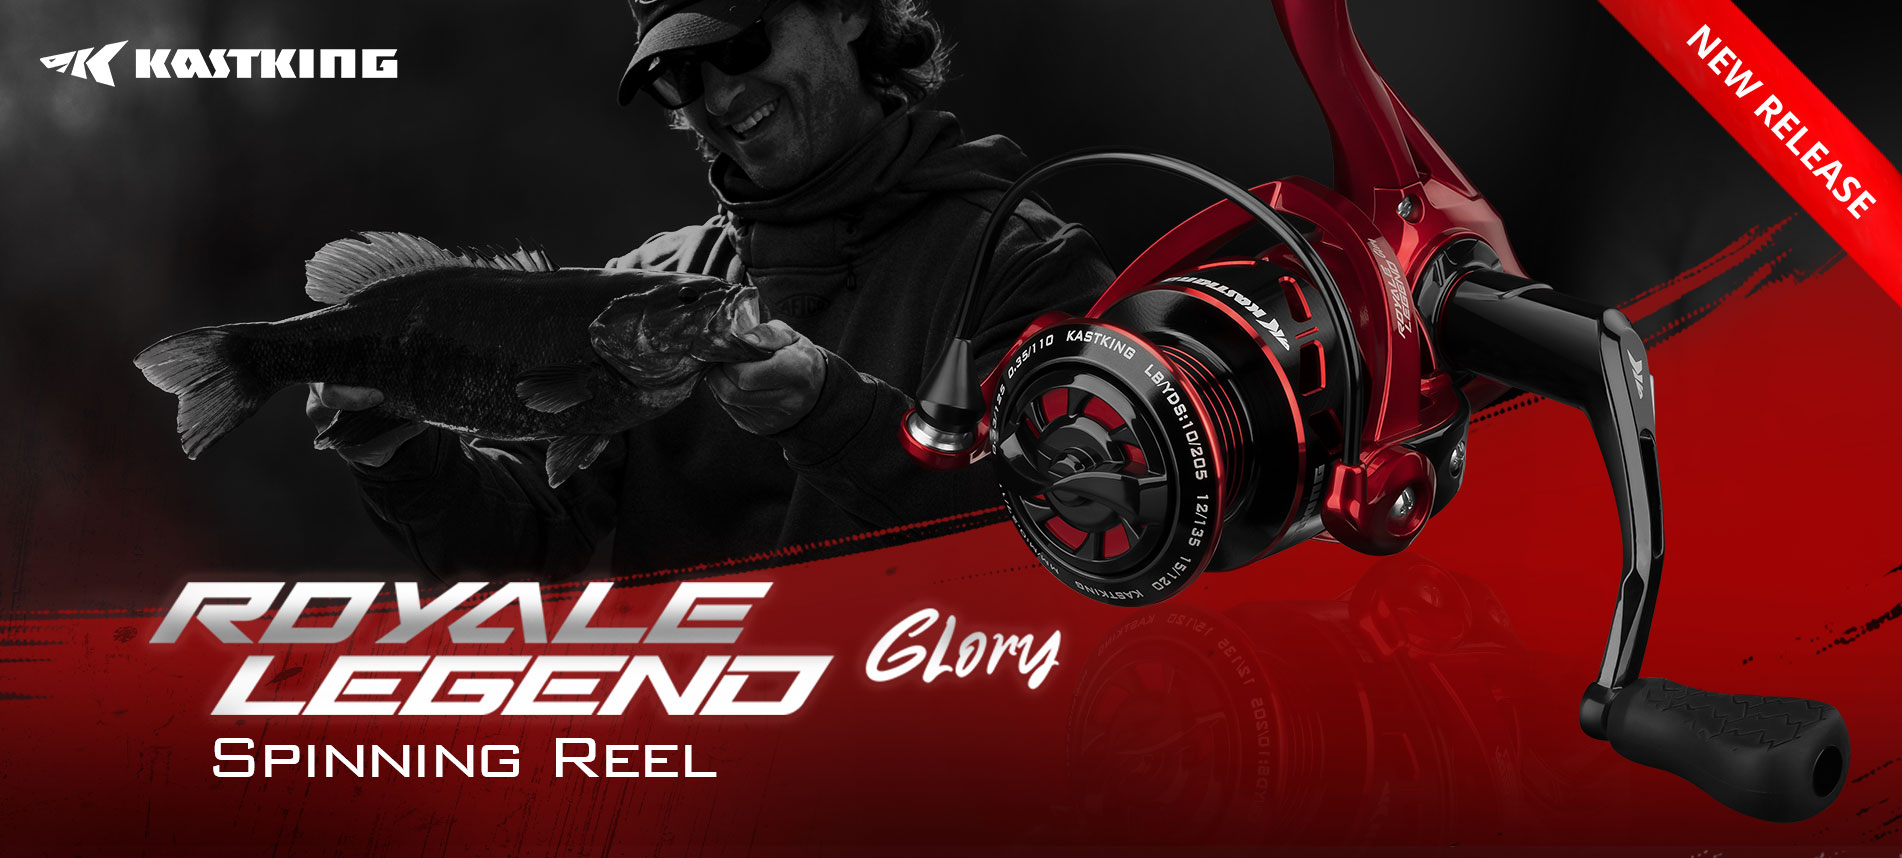 New Release: Royale Legend Glory Spinning Reel - KastKing